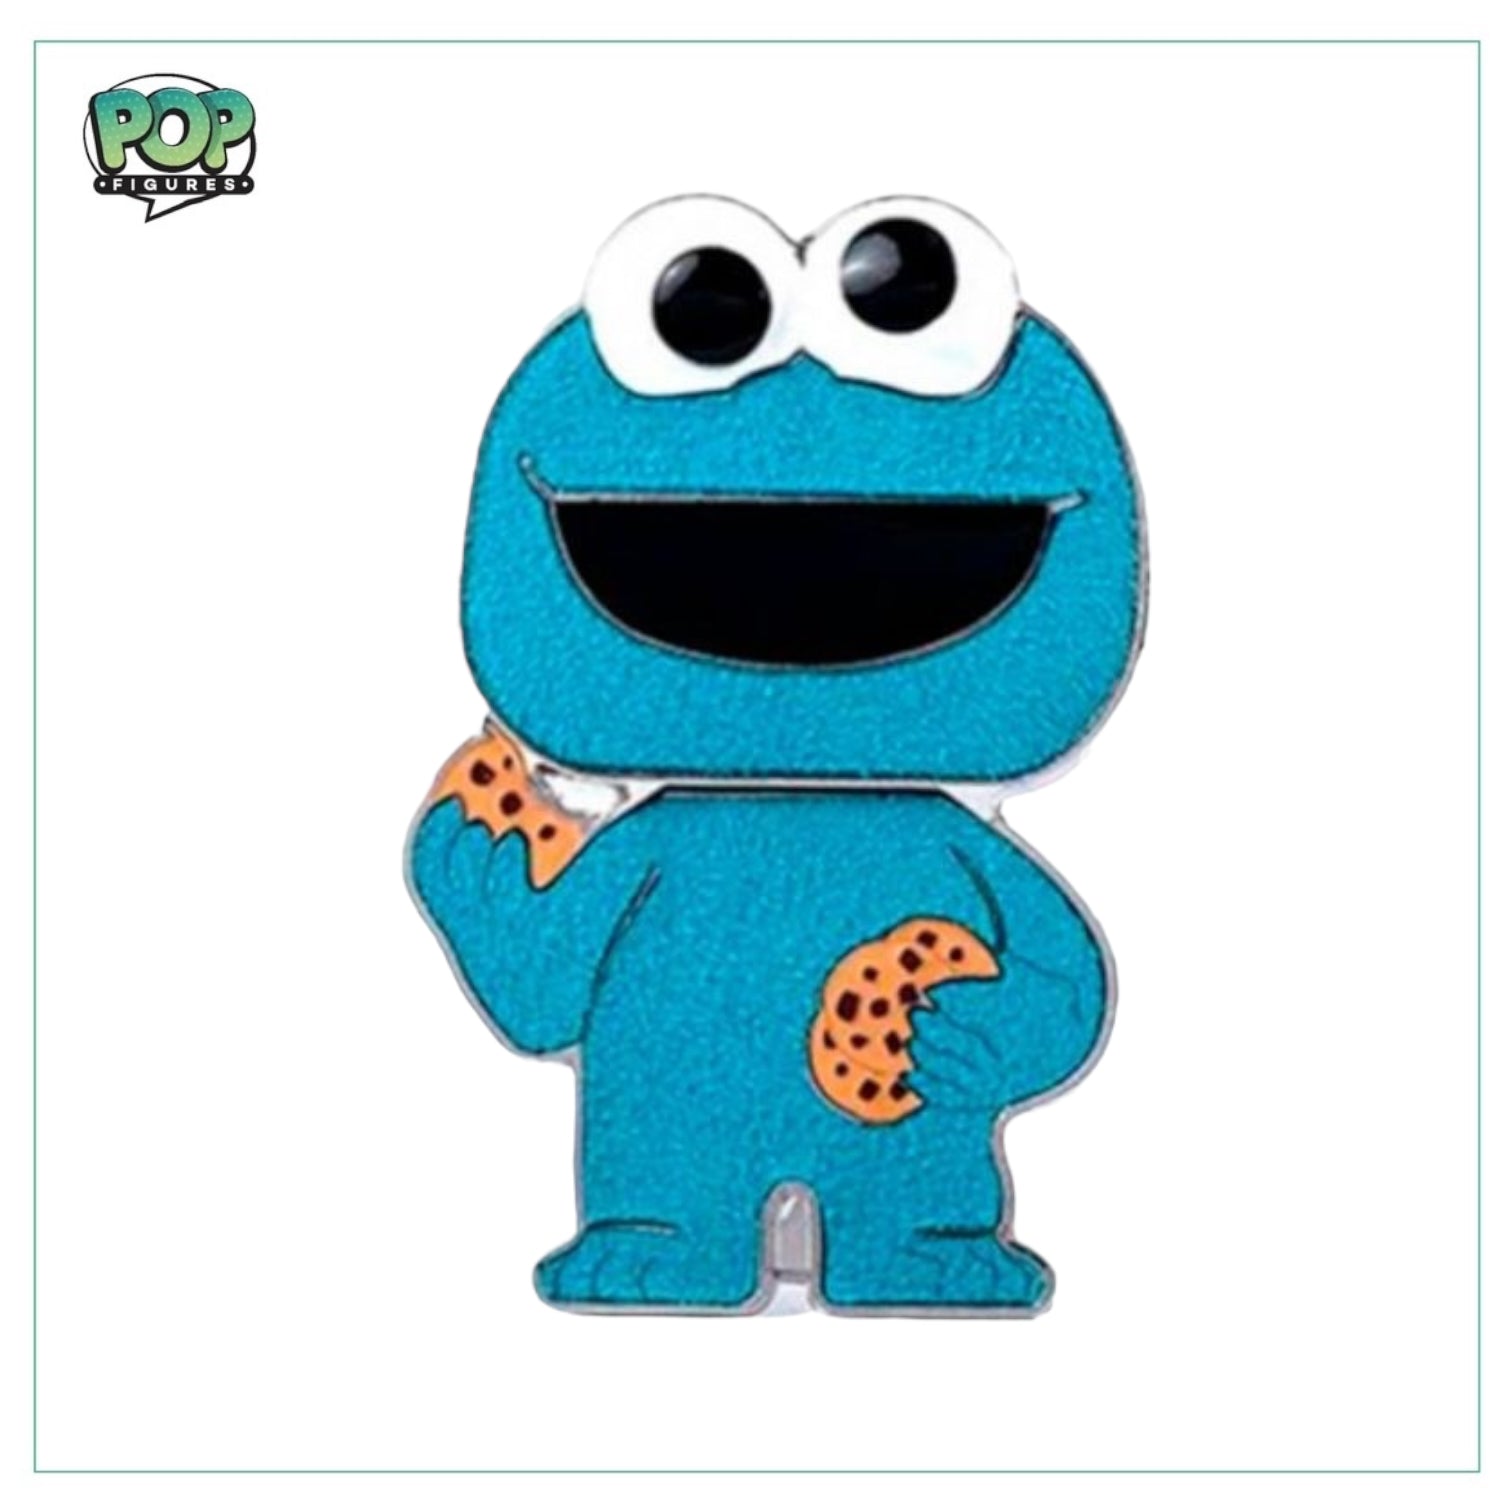 Cookie Monster #01 Funko Enamel Pop! Pin - Sesame Street